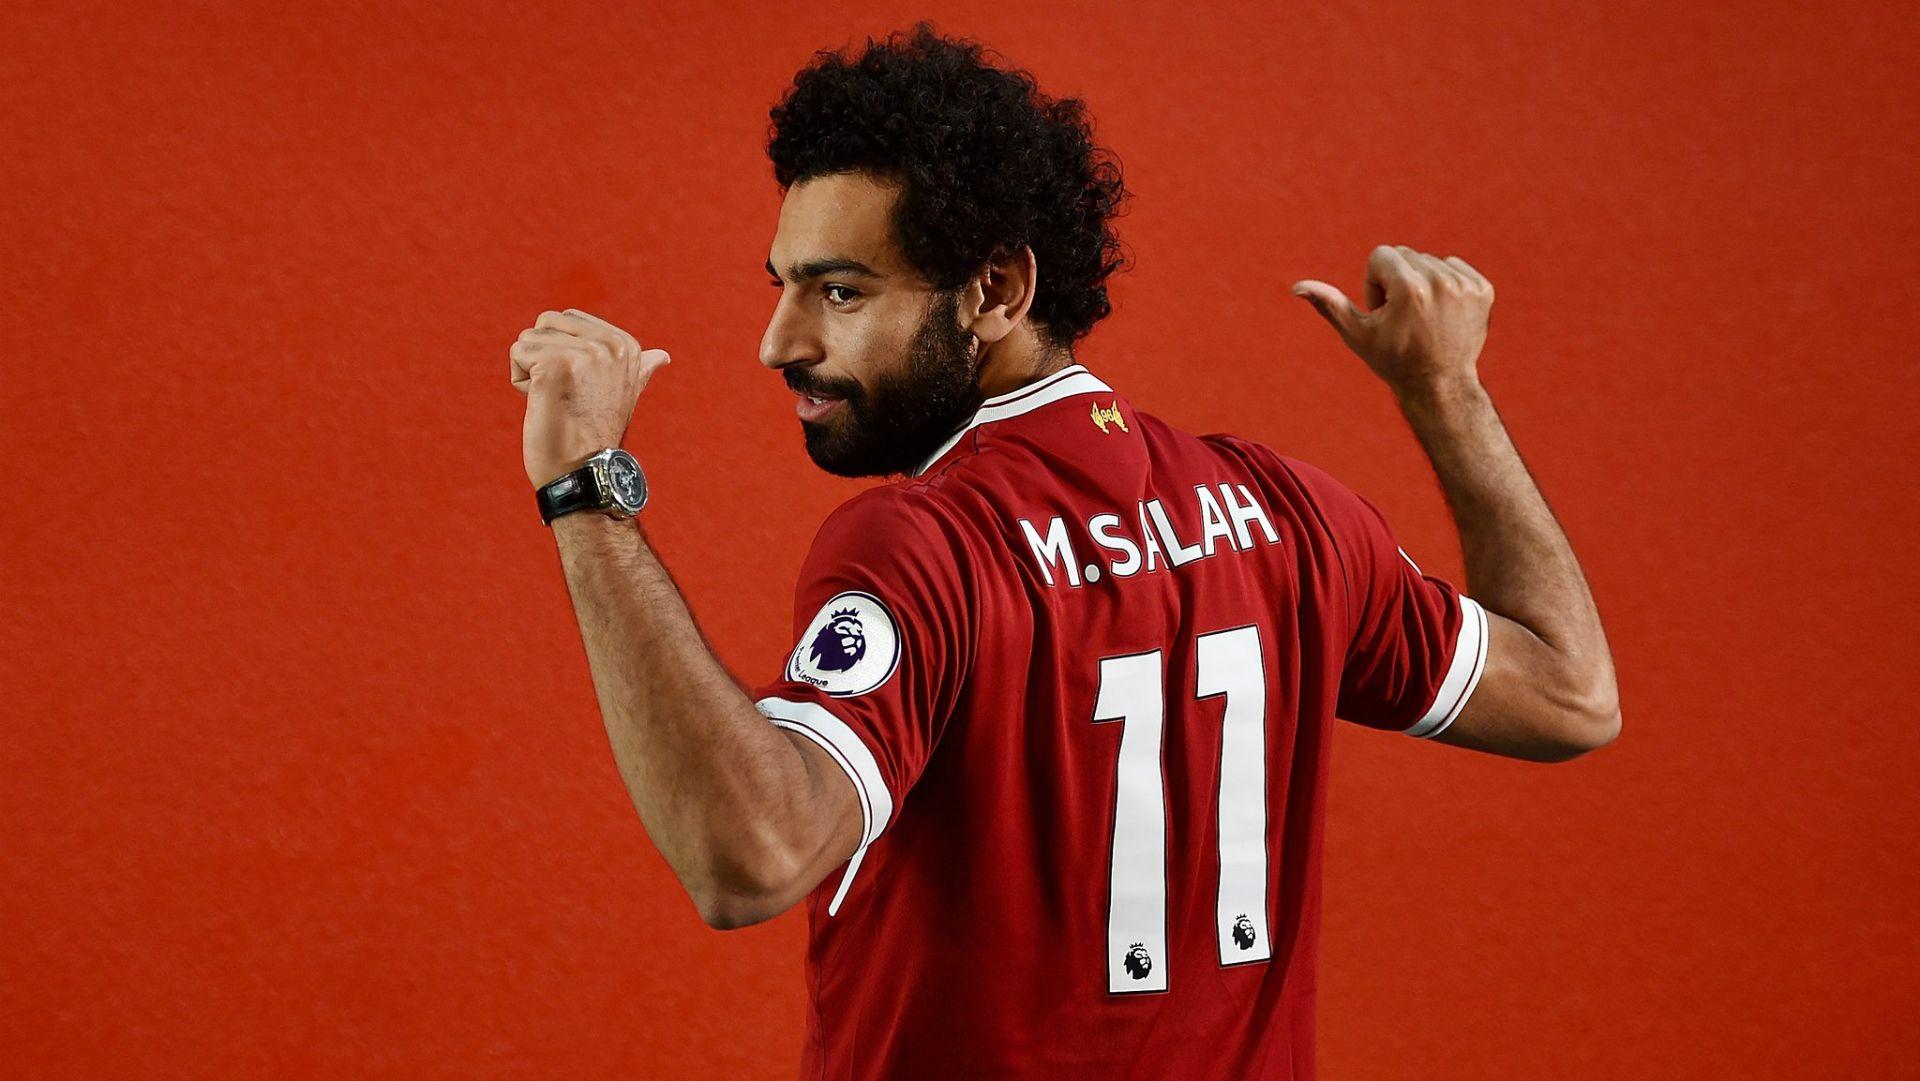 Mohamed Salah Footballer Latest Image HD Wallpaper. Beautiful